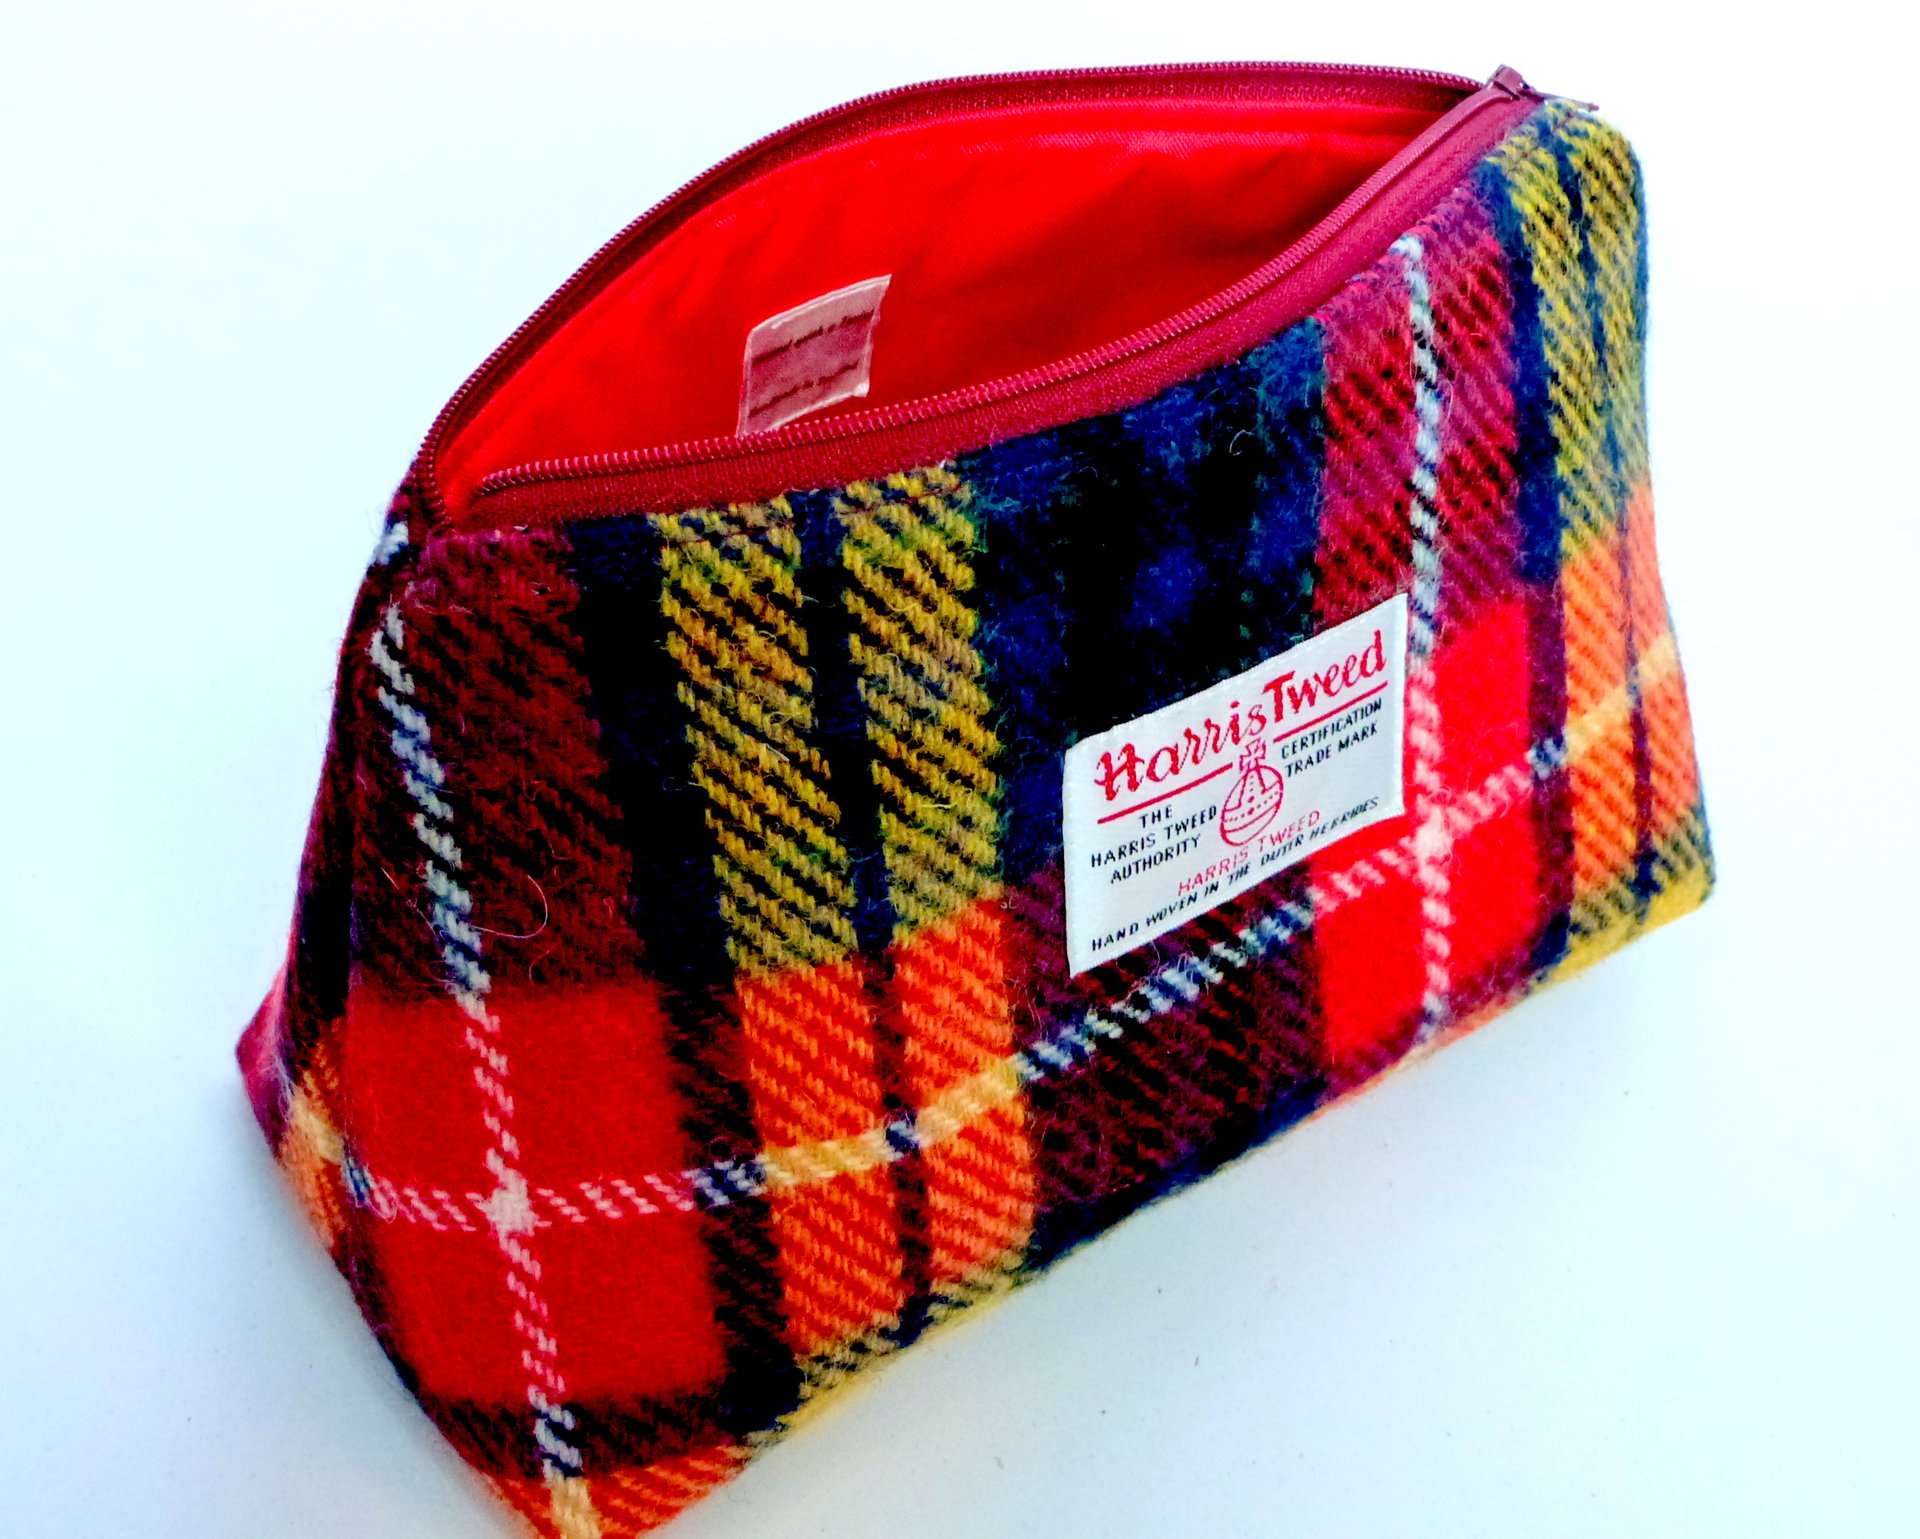 Buchanan Tartan Harris Tweed Cosmetic  make-up bag with matching compact mirror , red yellow blue plaid